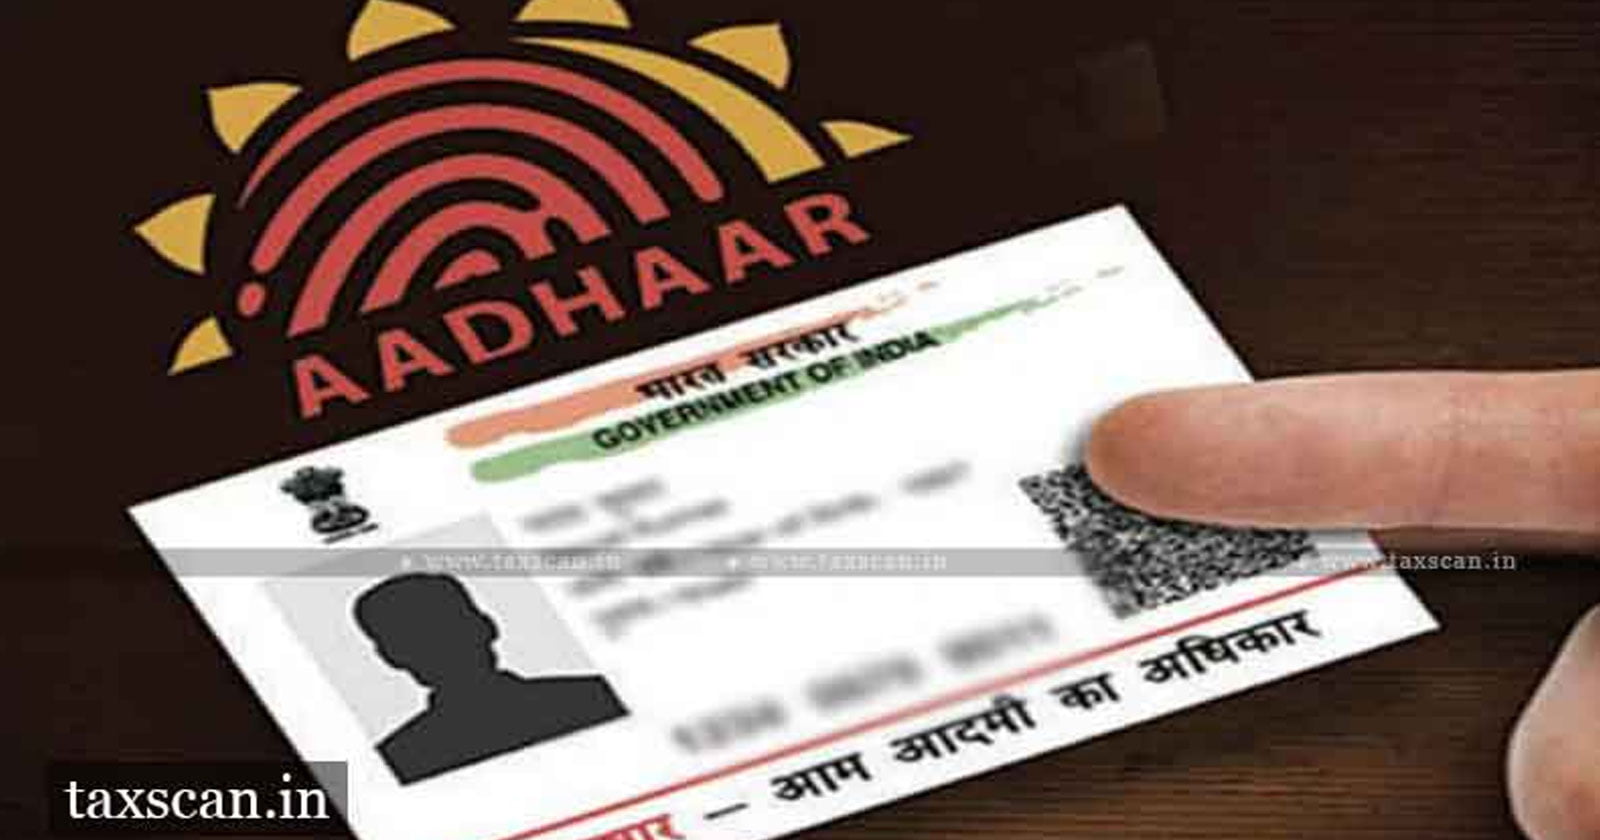 UIDAI -Online Aadhar Address Updates - Head of Family - Taxscan